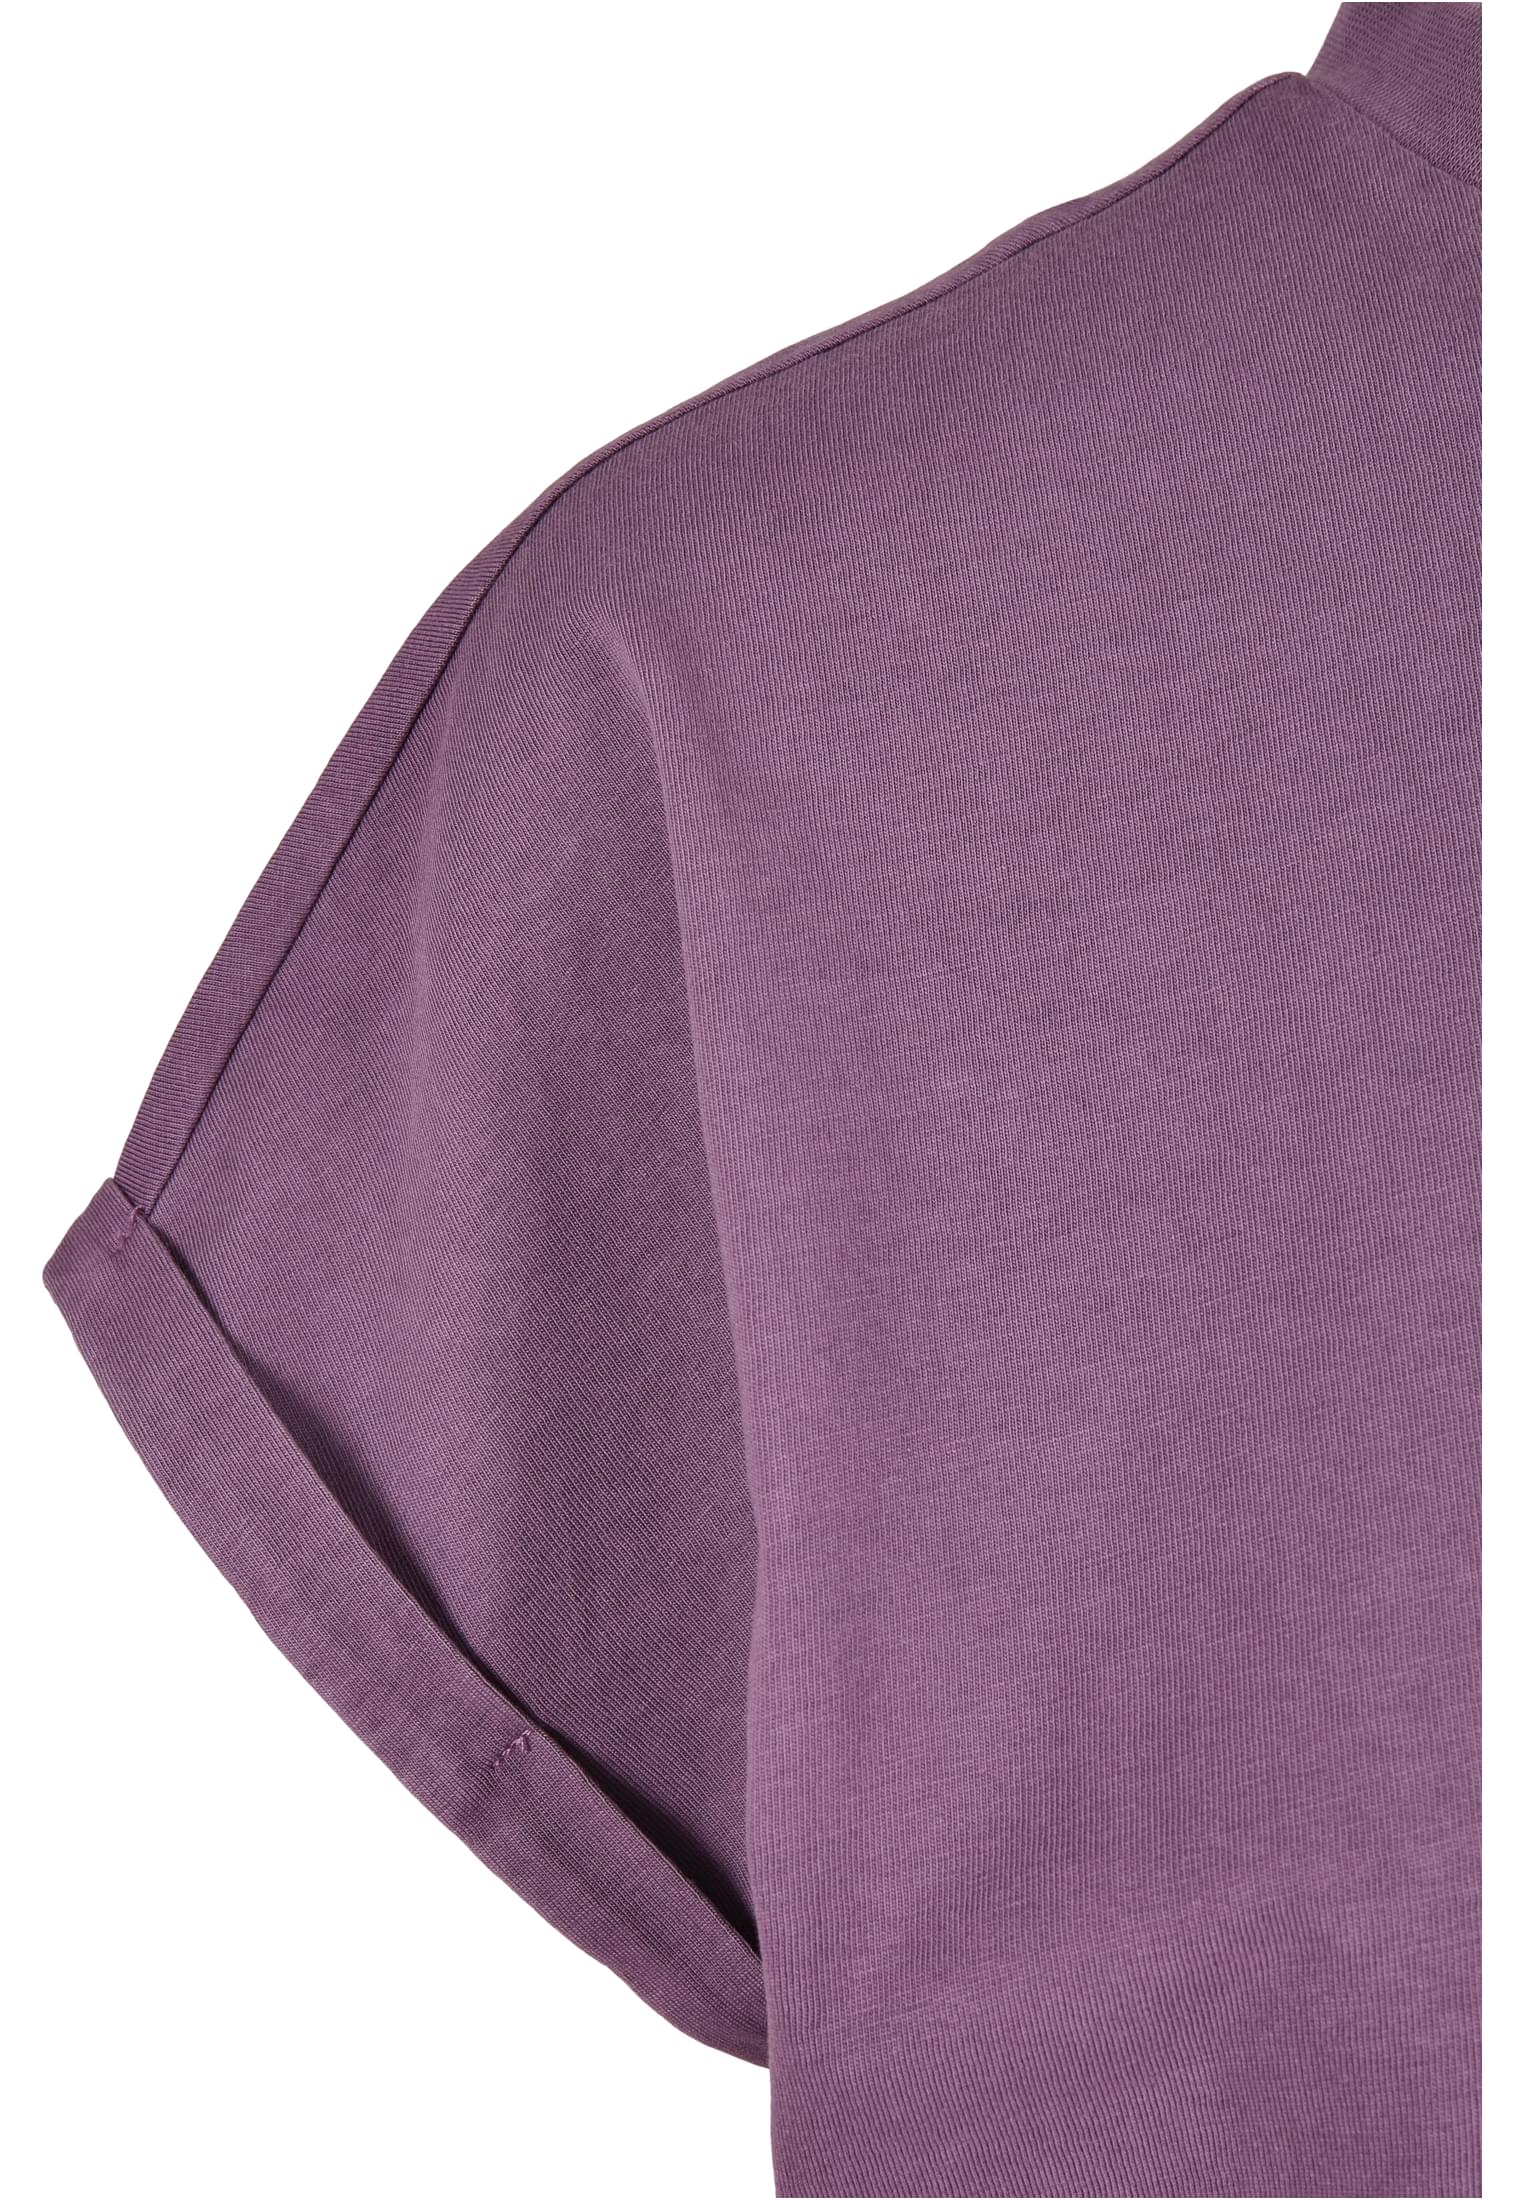 T-Shirts Ladies Short Pigment Dye Cut On Sleeve Tee in Farbe duskviolet